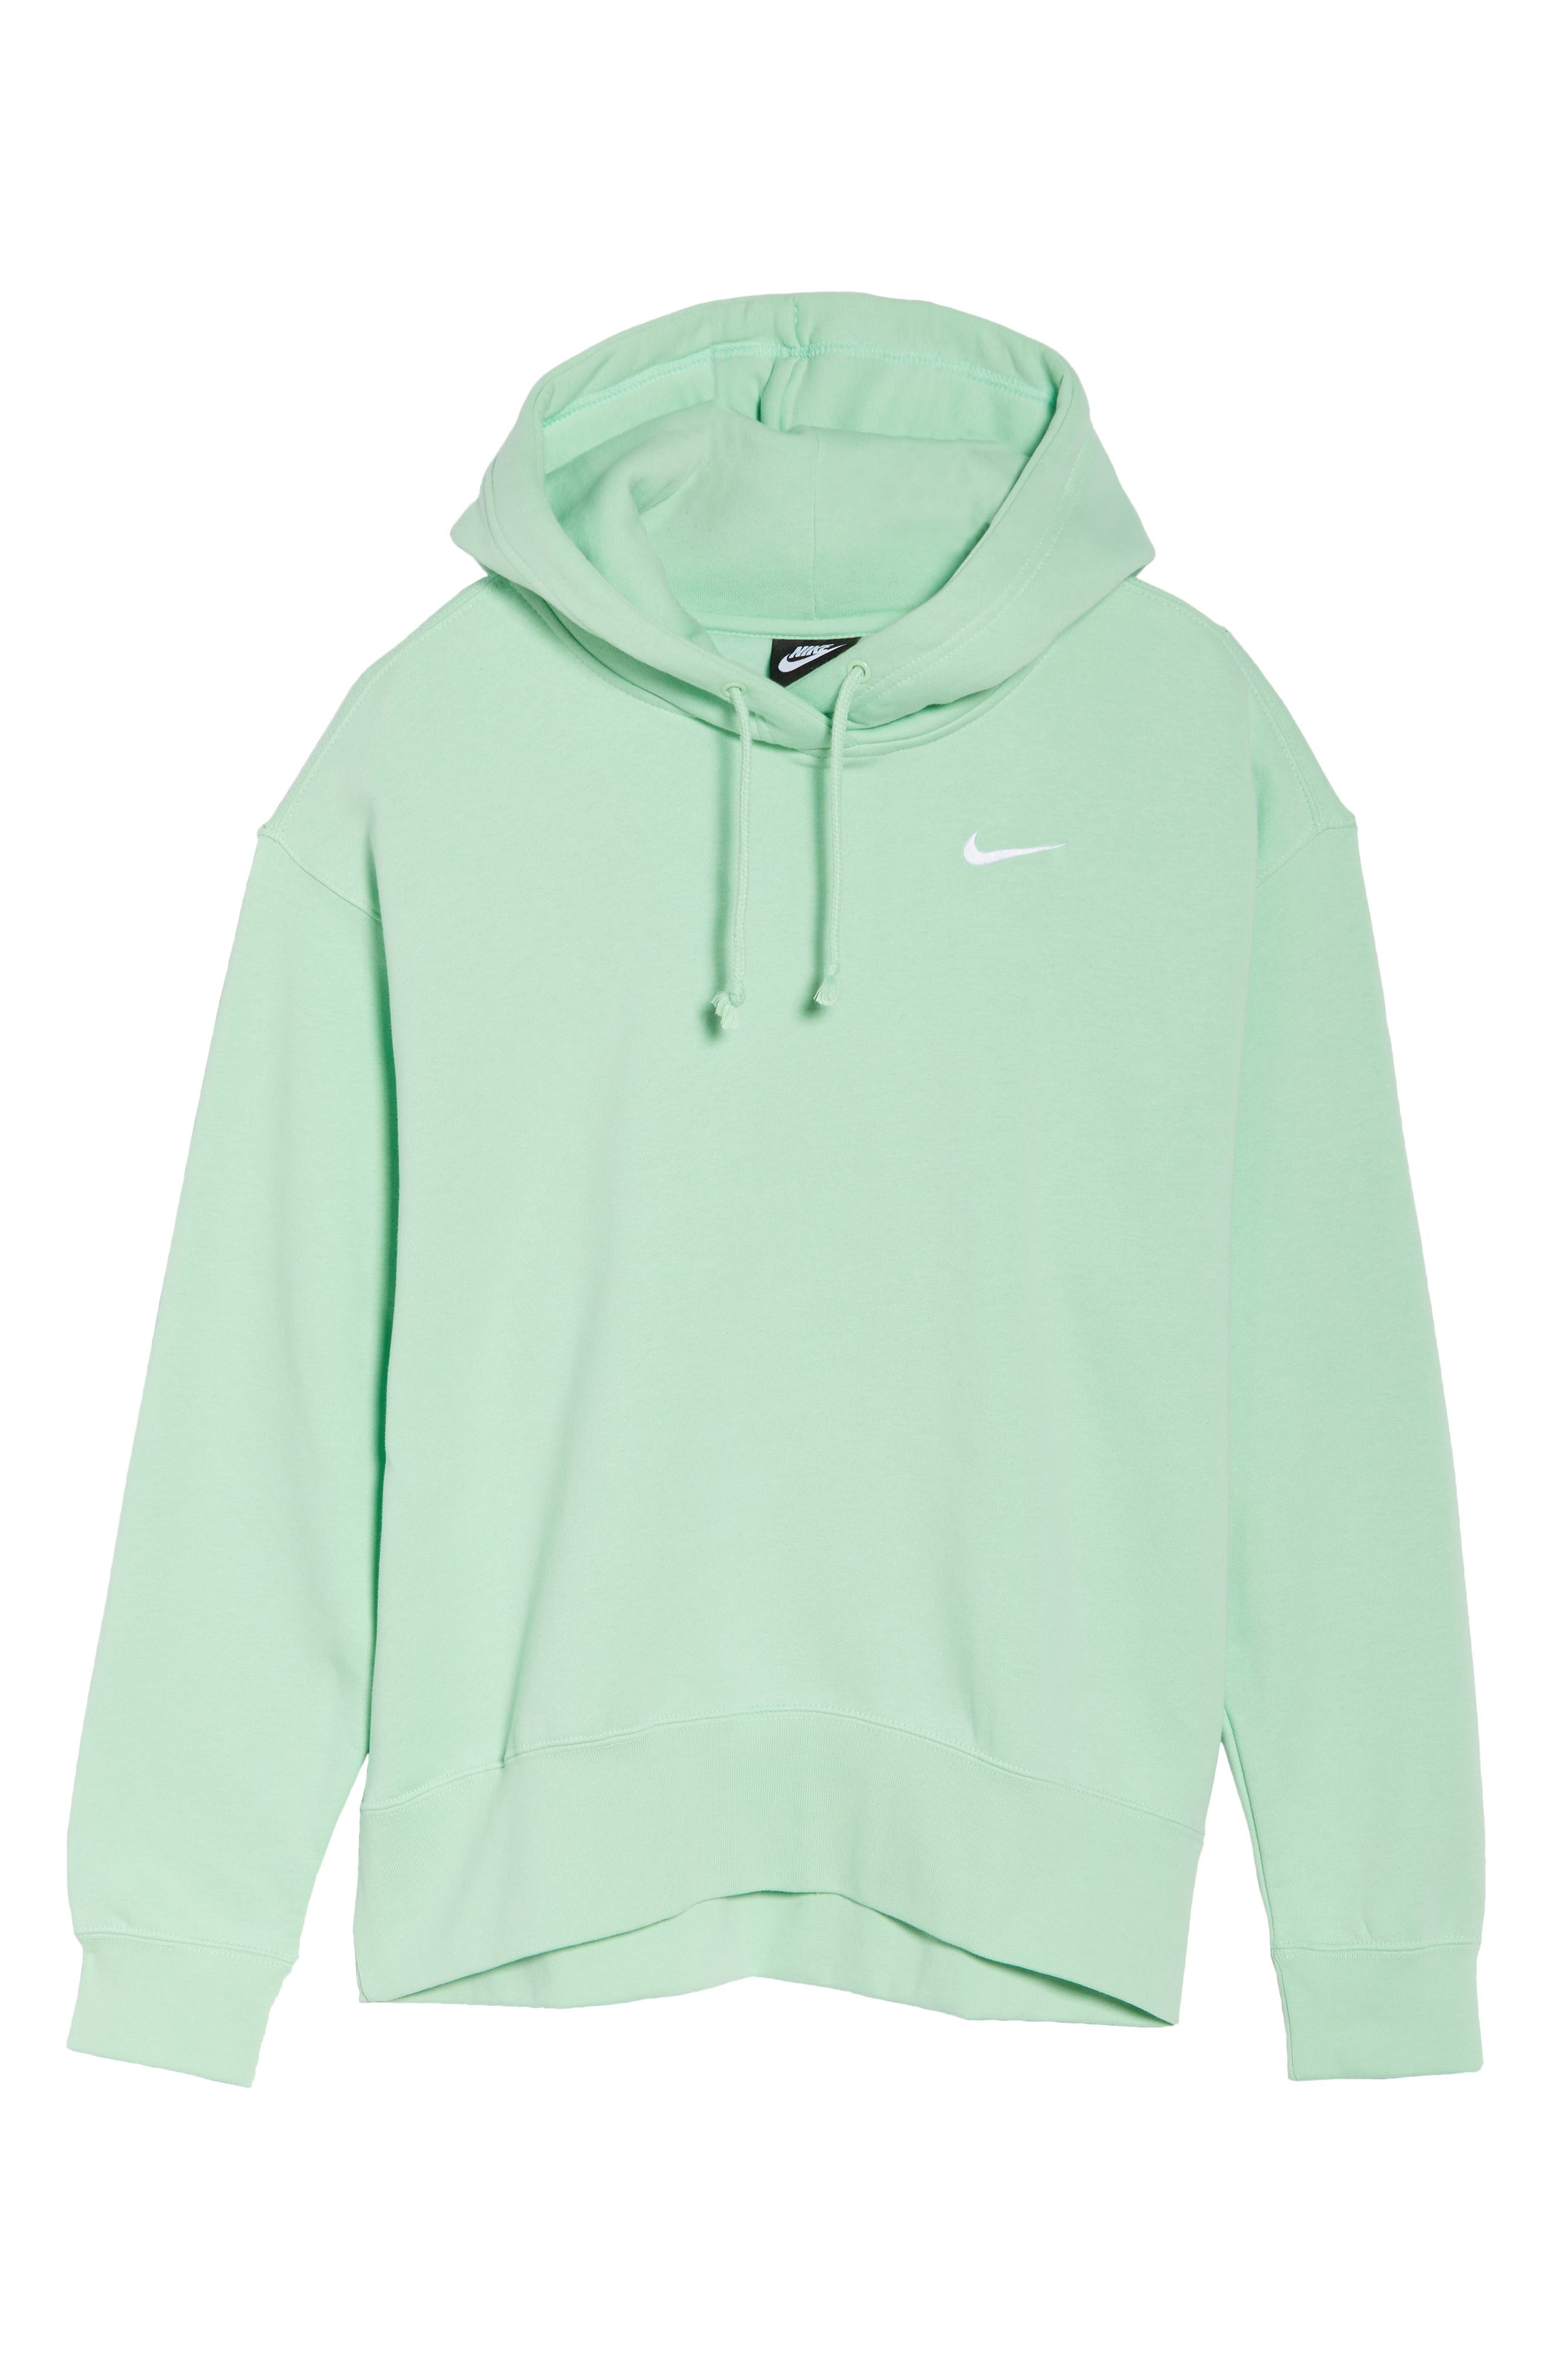 nike olive green hoodie women's